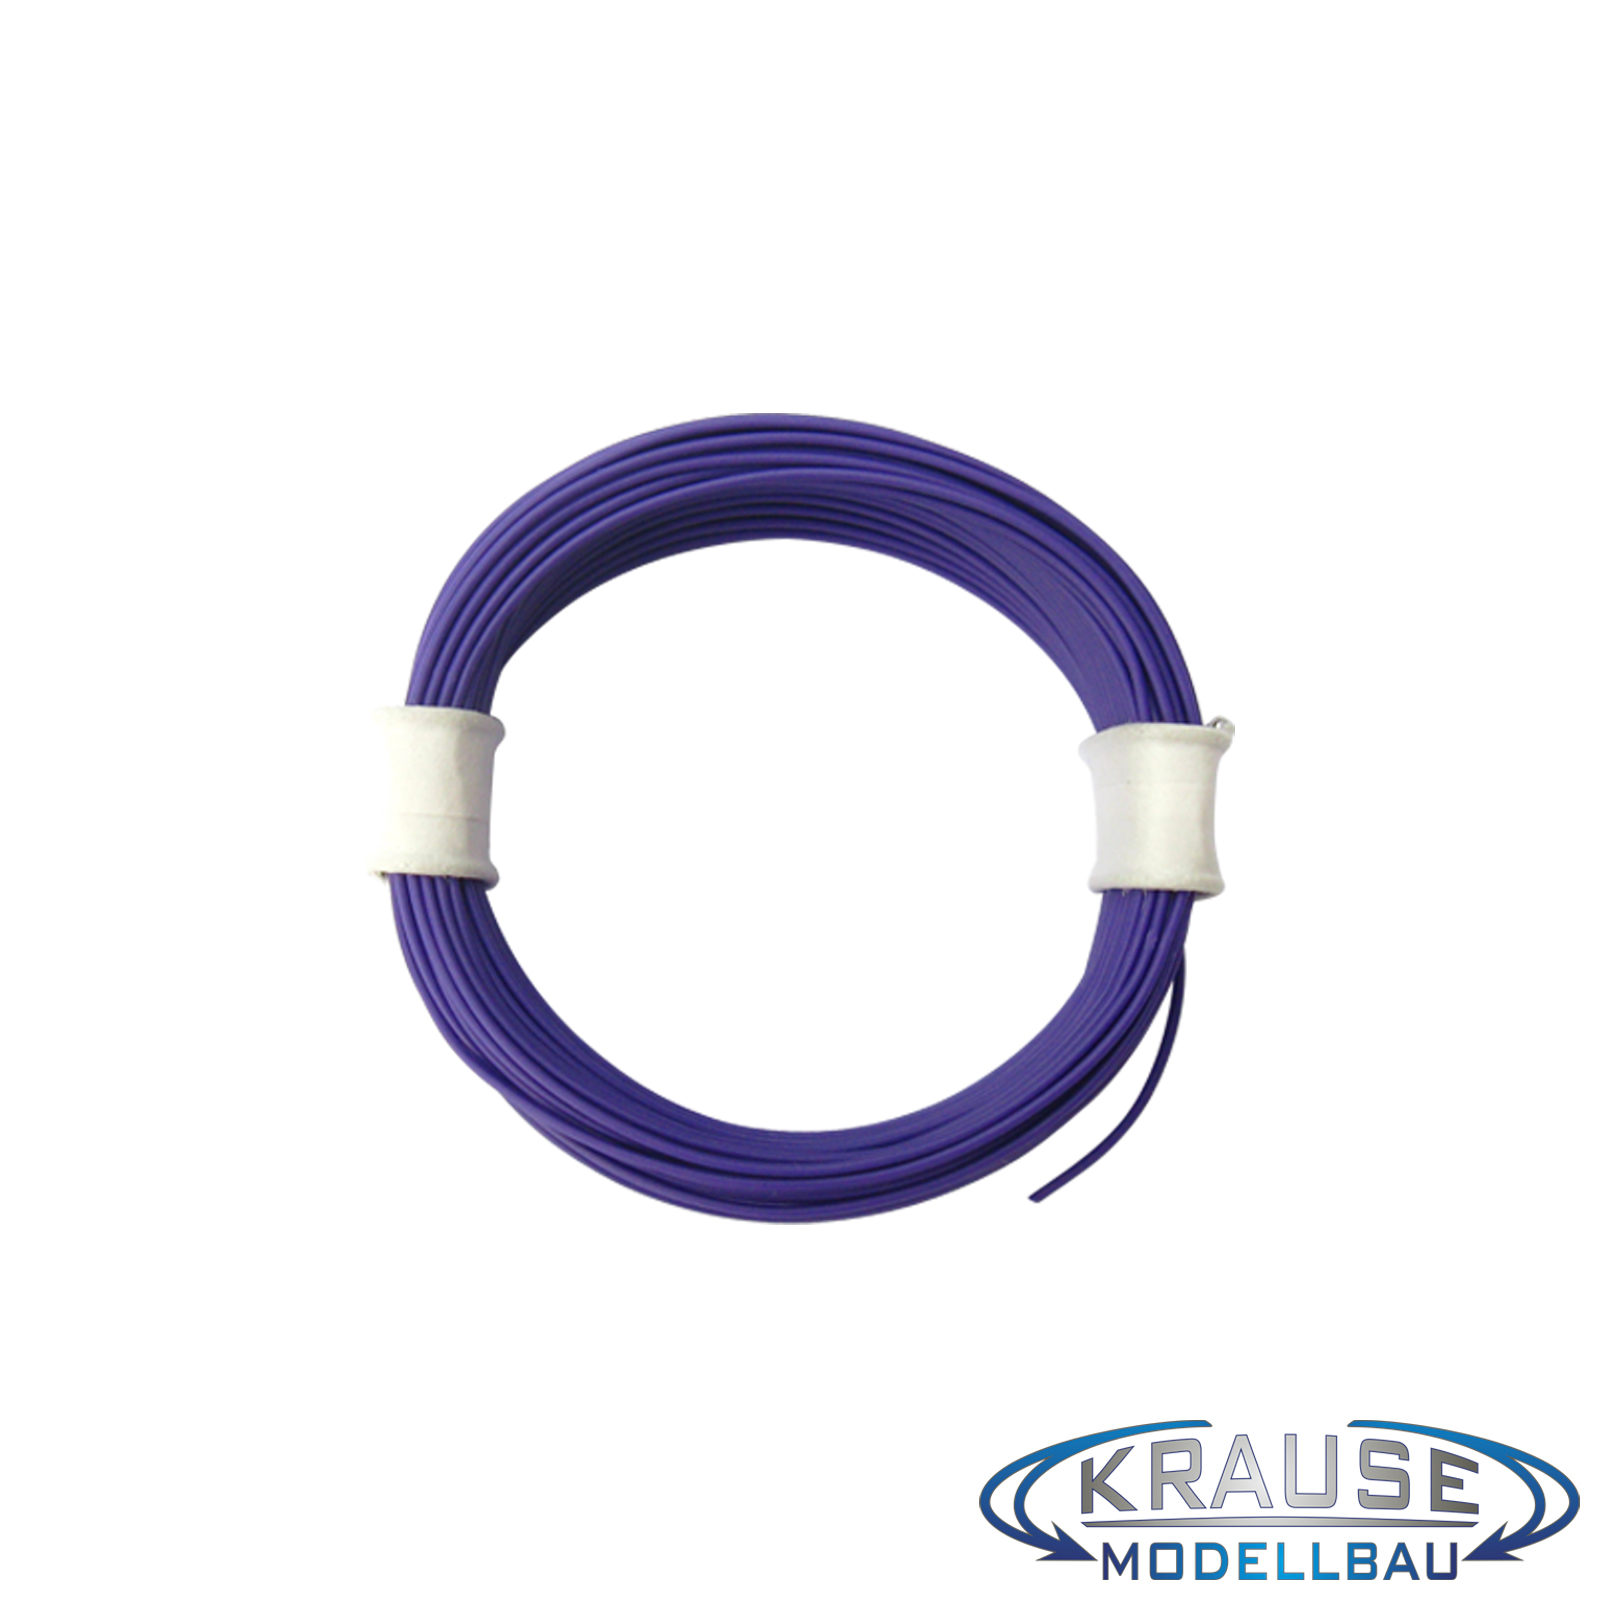 Schaltlitze Miniaturkabel LIFY 0,04 mm² hochflexibel violett 10 Meter Modellbahn 